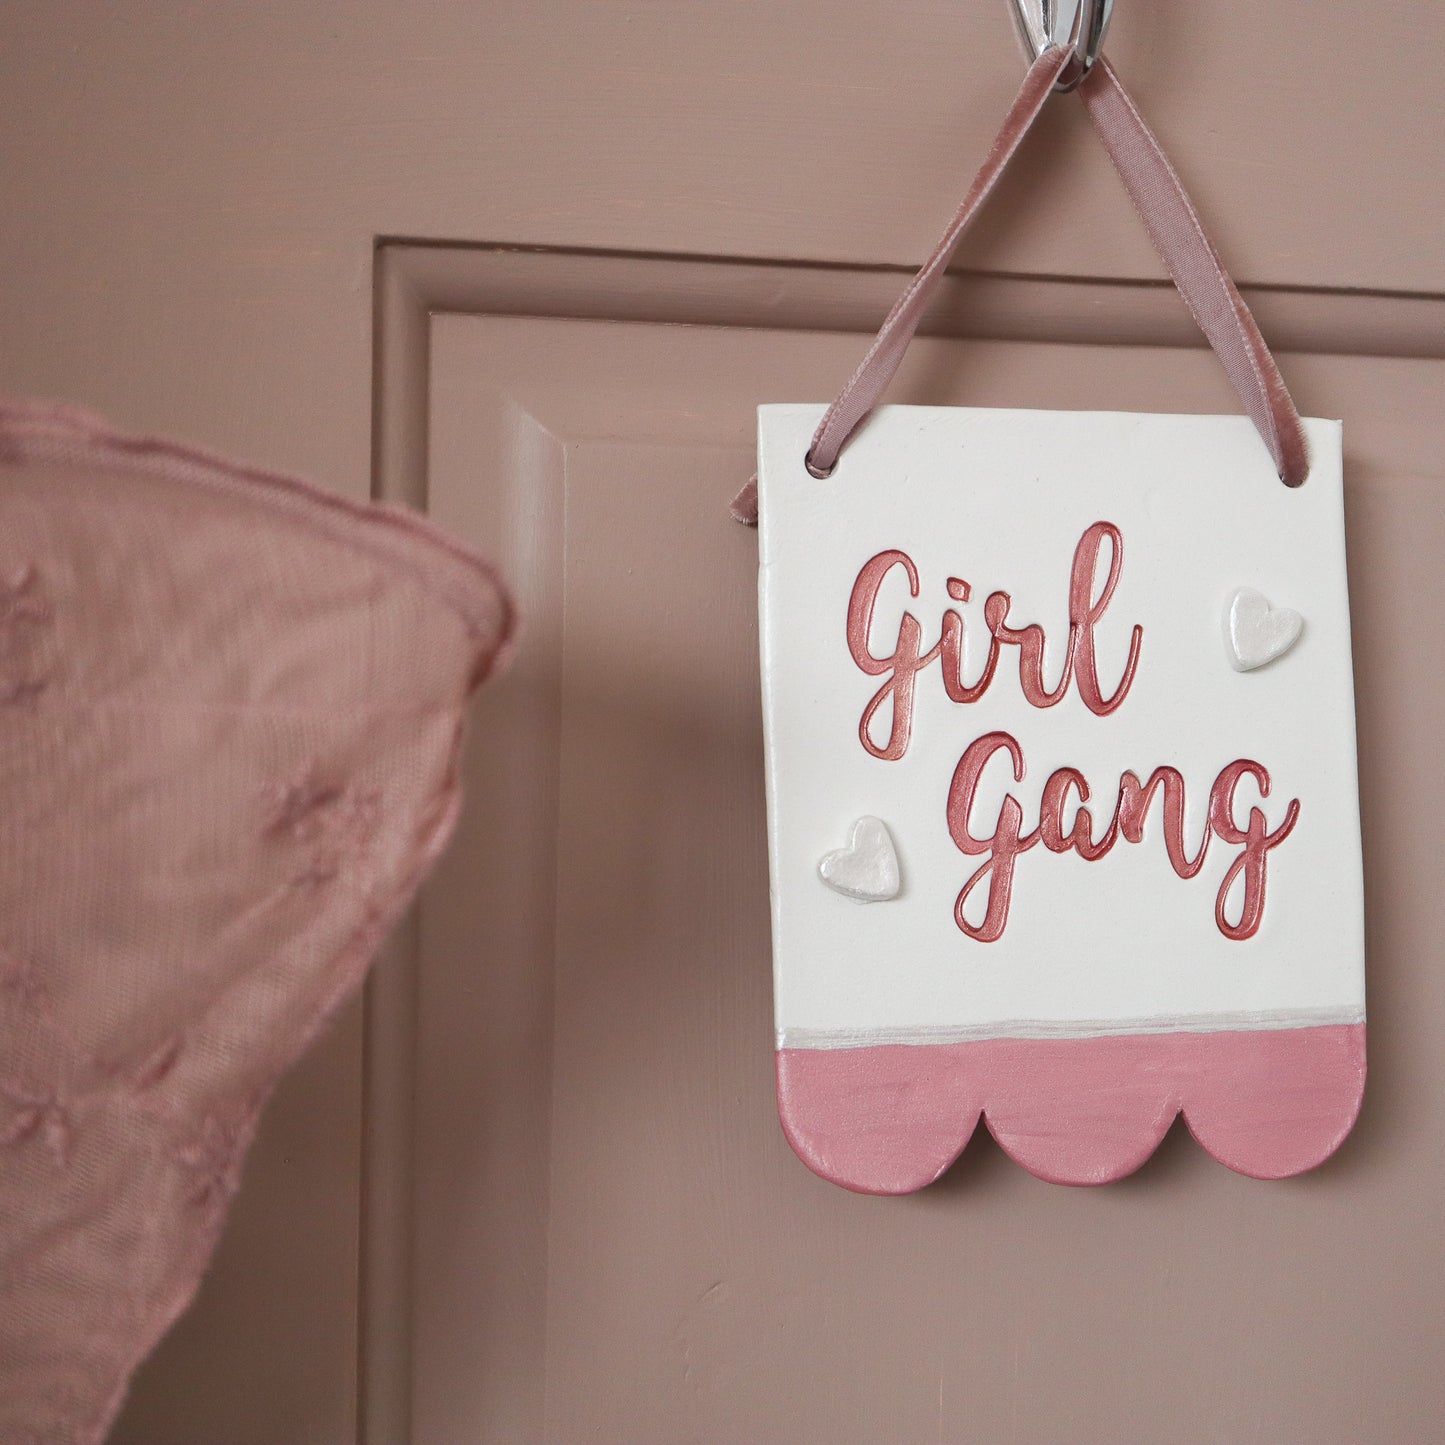 Girl gang sign